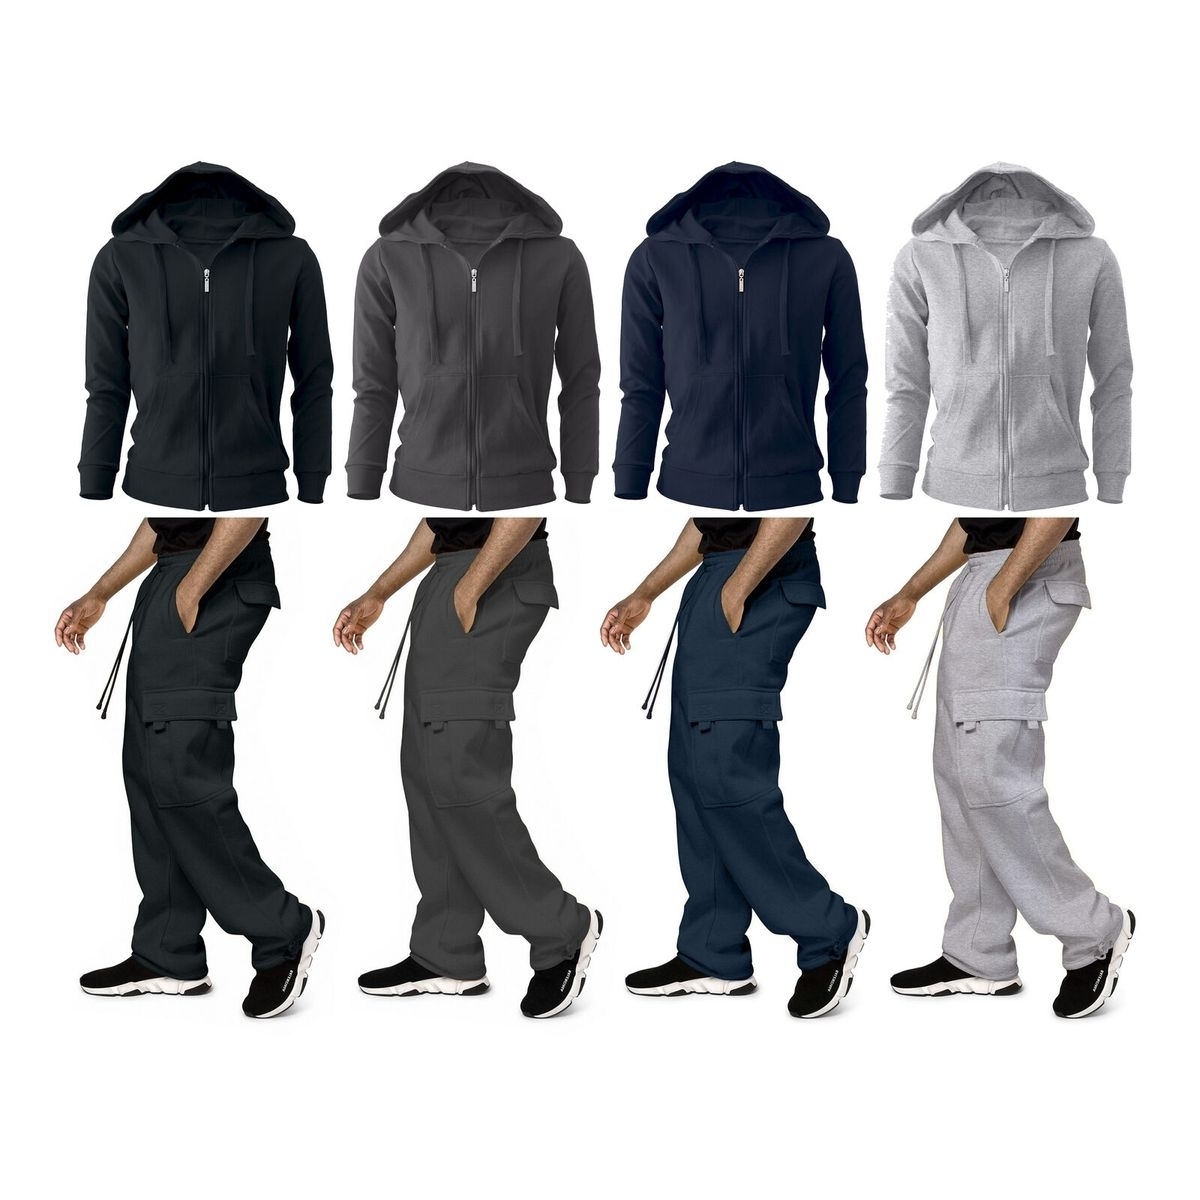 Men's Big & Tall Winter Warm Athletic Active Cozy Fleece Lined Multi-Pocket Full Zip Up Cargo Tracksuit - Black, Xx-large